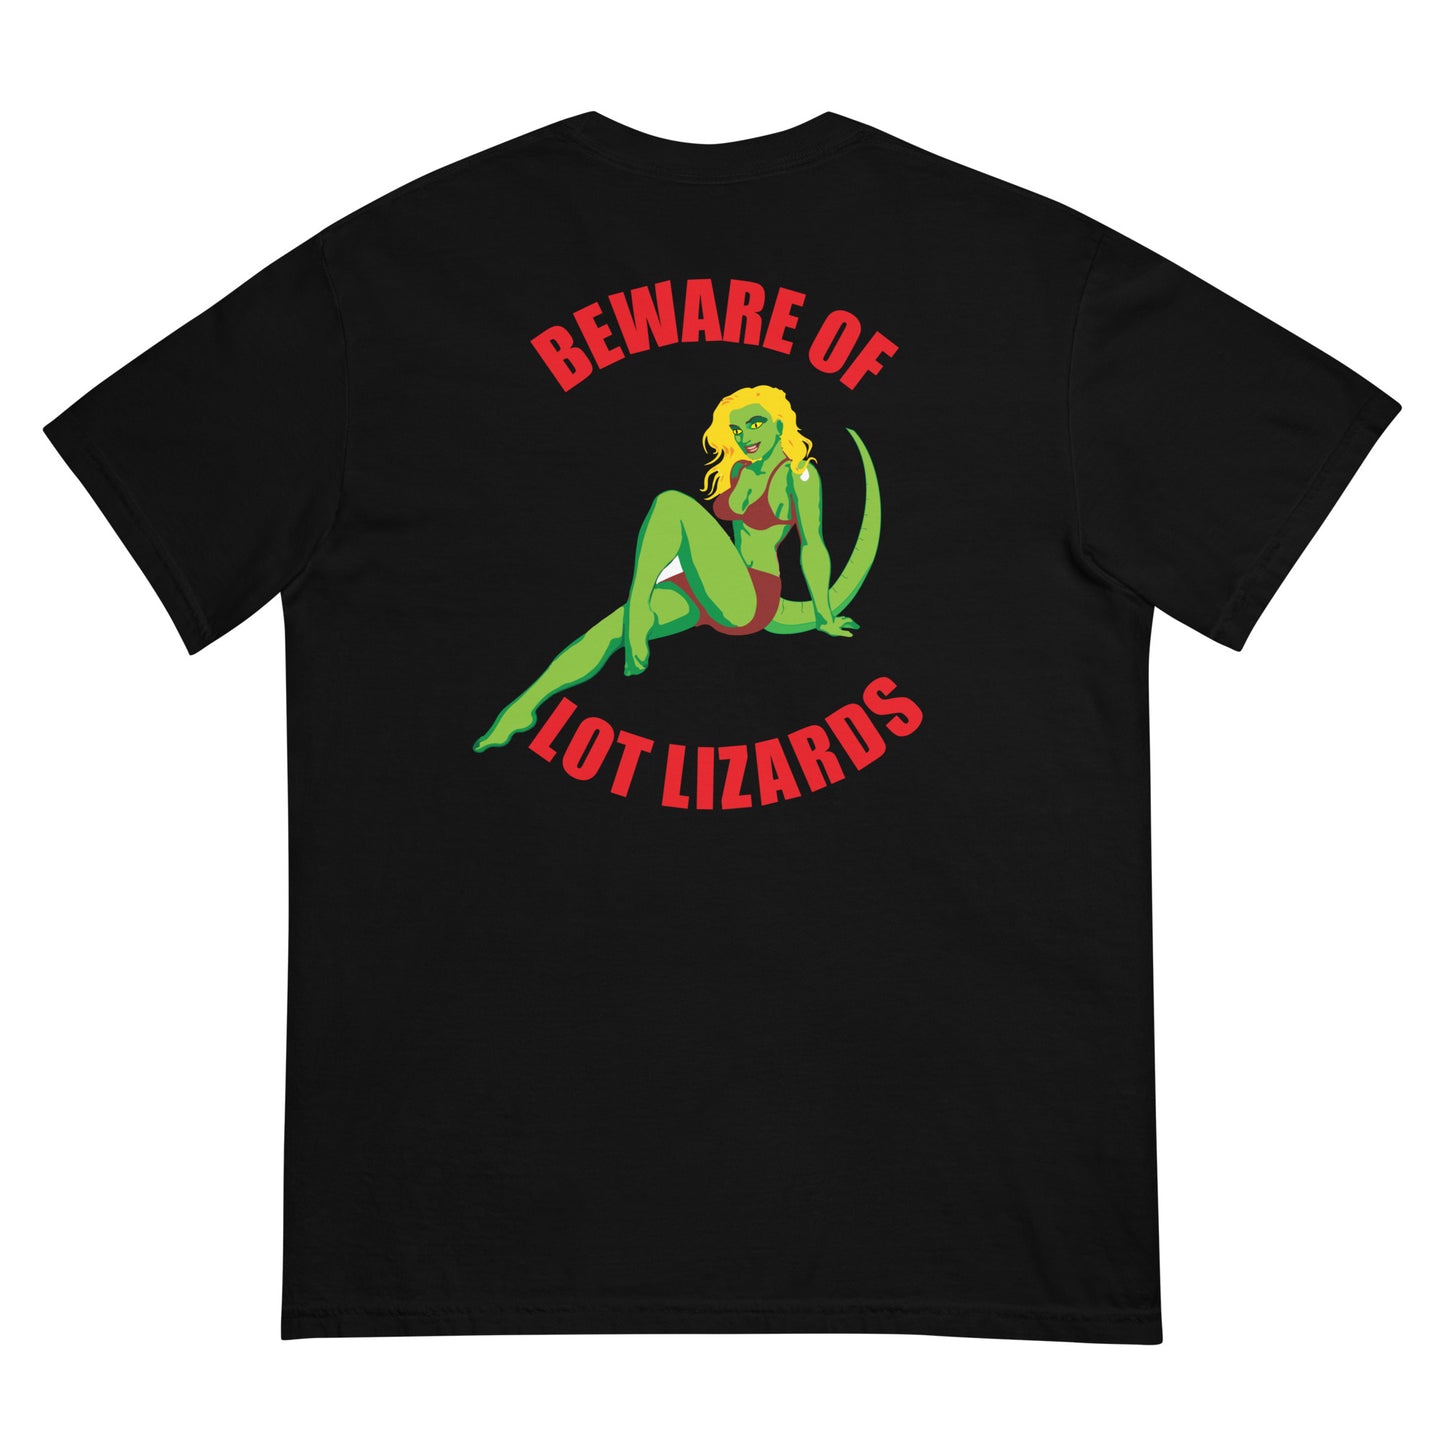 Lot Lizards